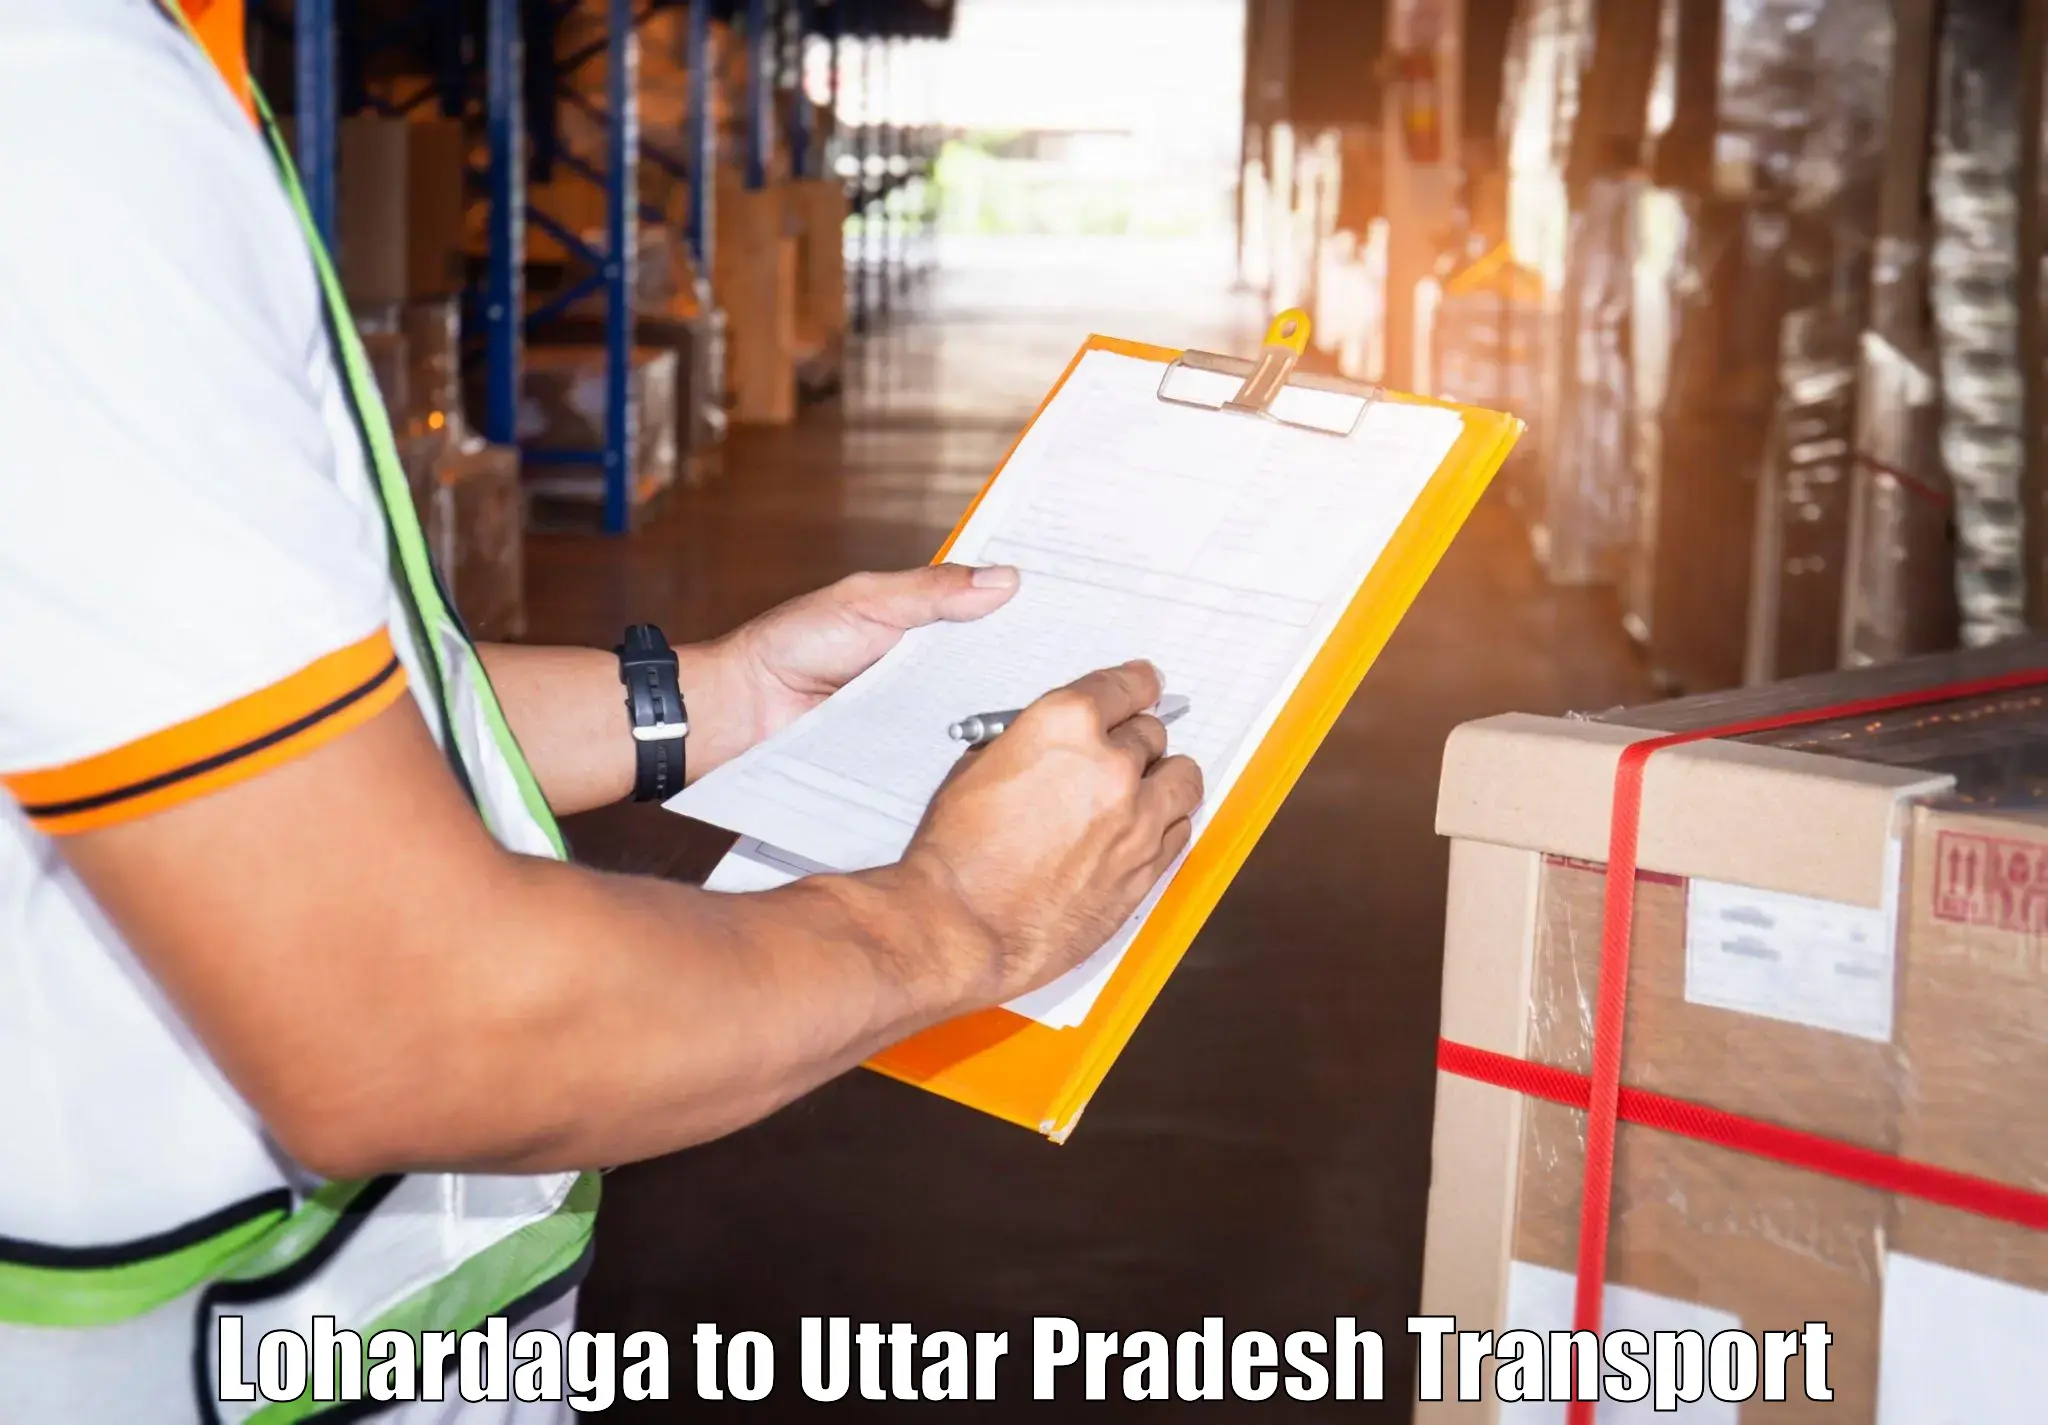 Truck transport companies in India Lohardaga to Lucknow